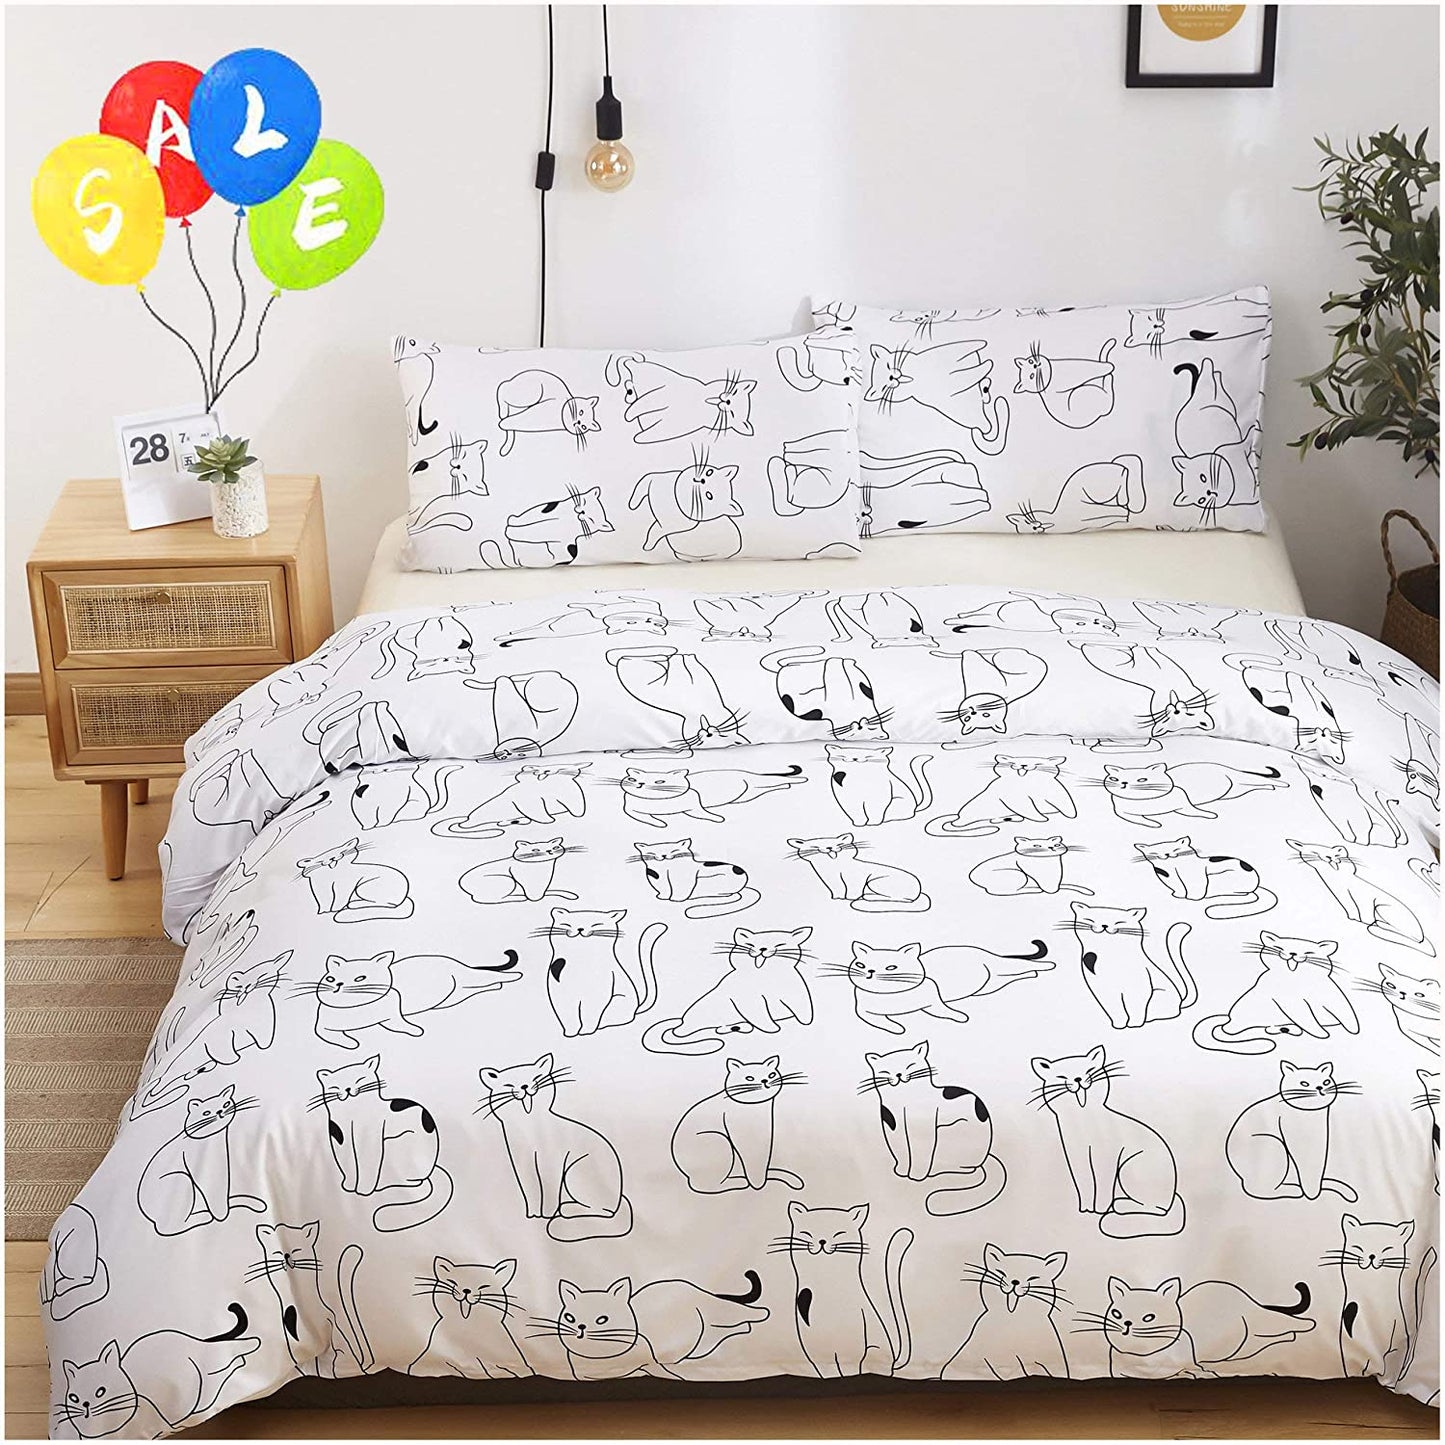 3 Pieces Cats Pattern Duvet Cover Set, Premium Microfiber, Cute Cats Pattern on Comforter Cover-3Pcs: 1X Duvet Cover 2X Pillowcases, Comforter Cover with Zipper Closure